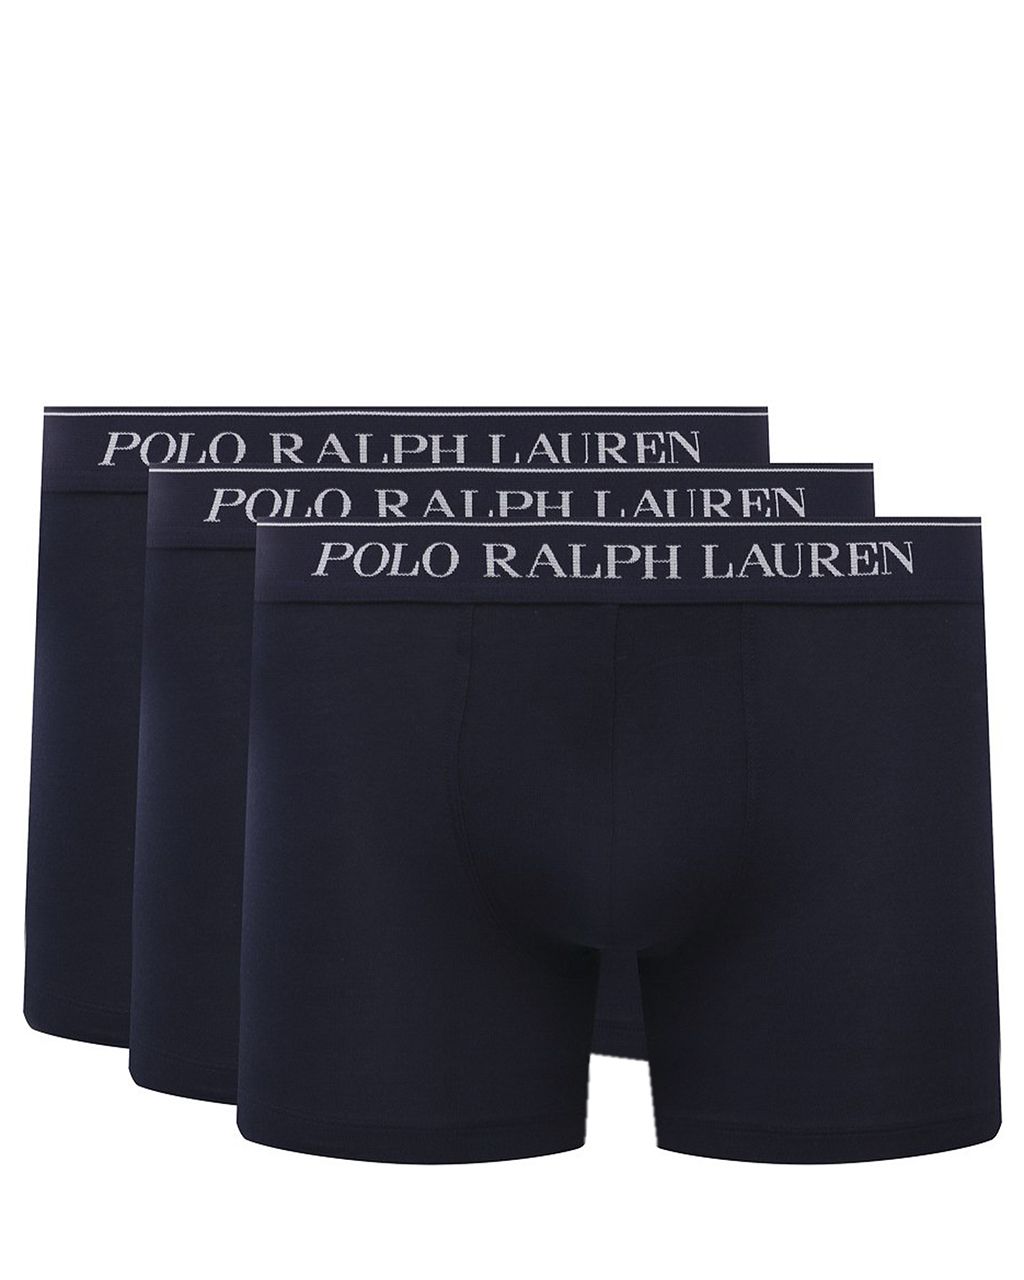 Polo Ralph Lauren Boxershort 3-pack Donker blauw 078604-001-L